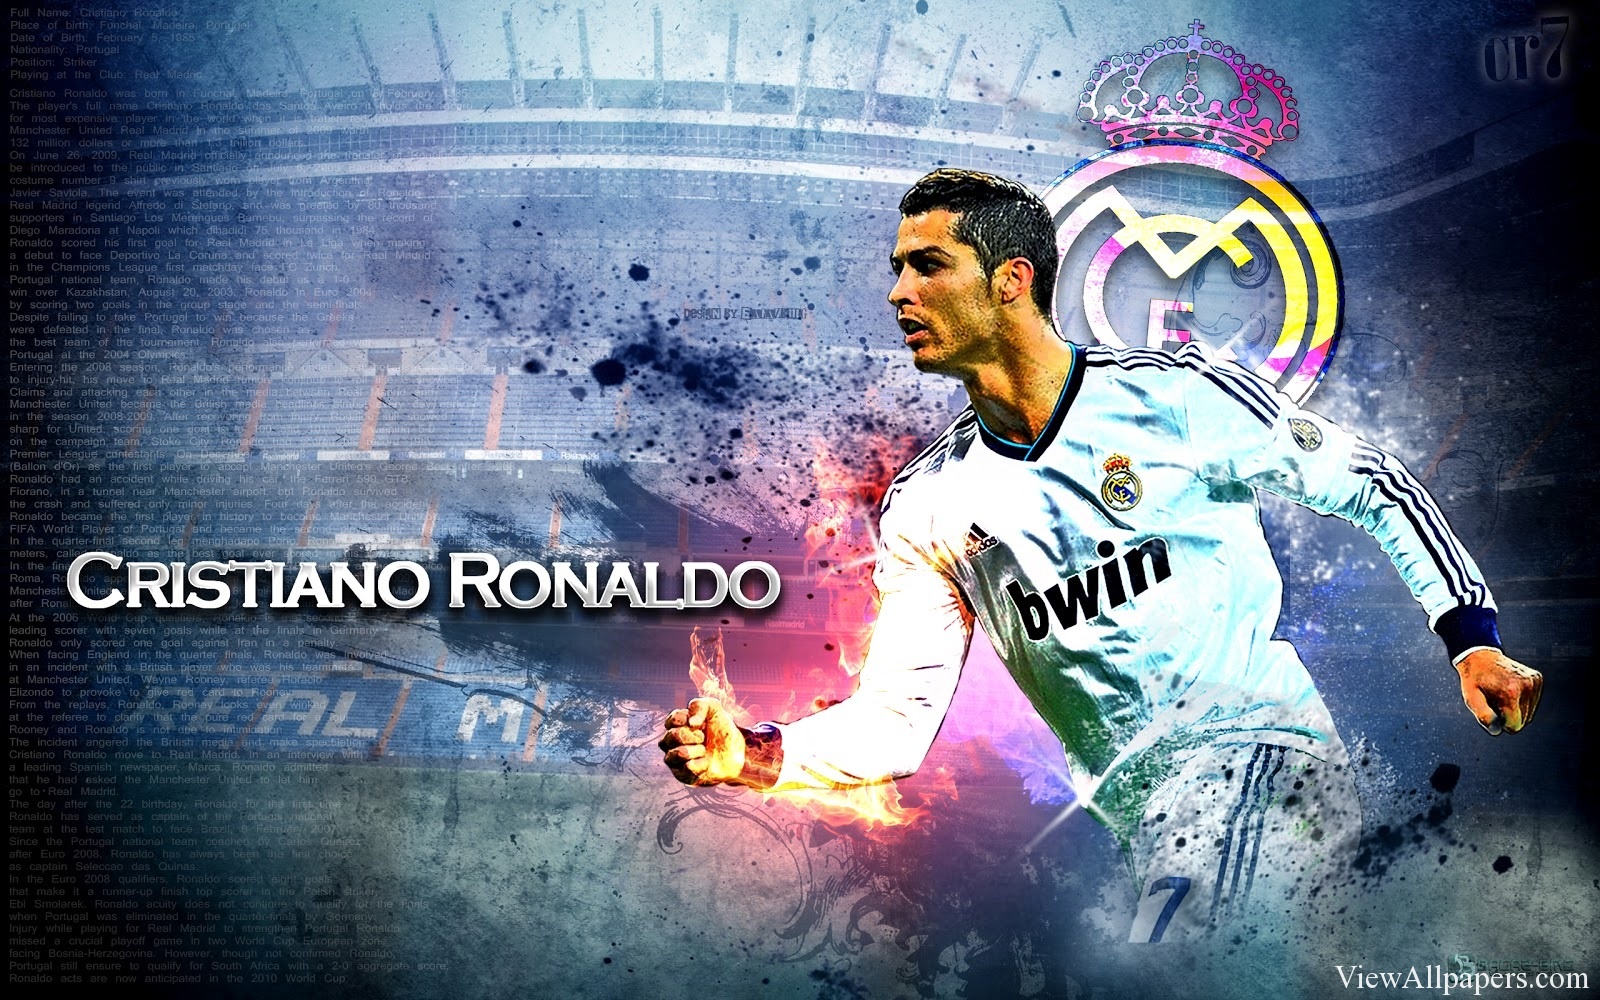 2014 Ronaldo Wallpaper High Resolution Free download this CR7 2014